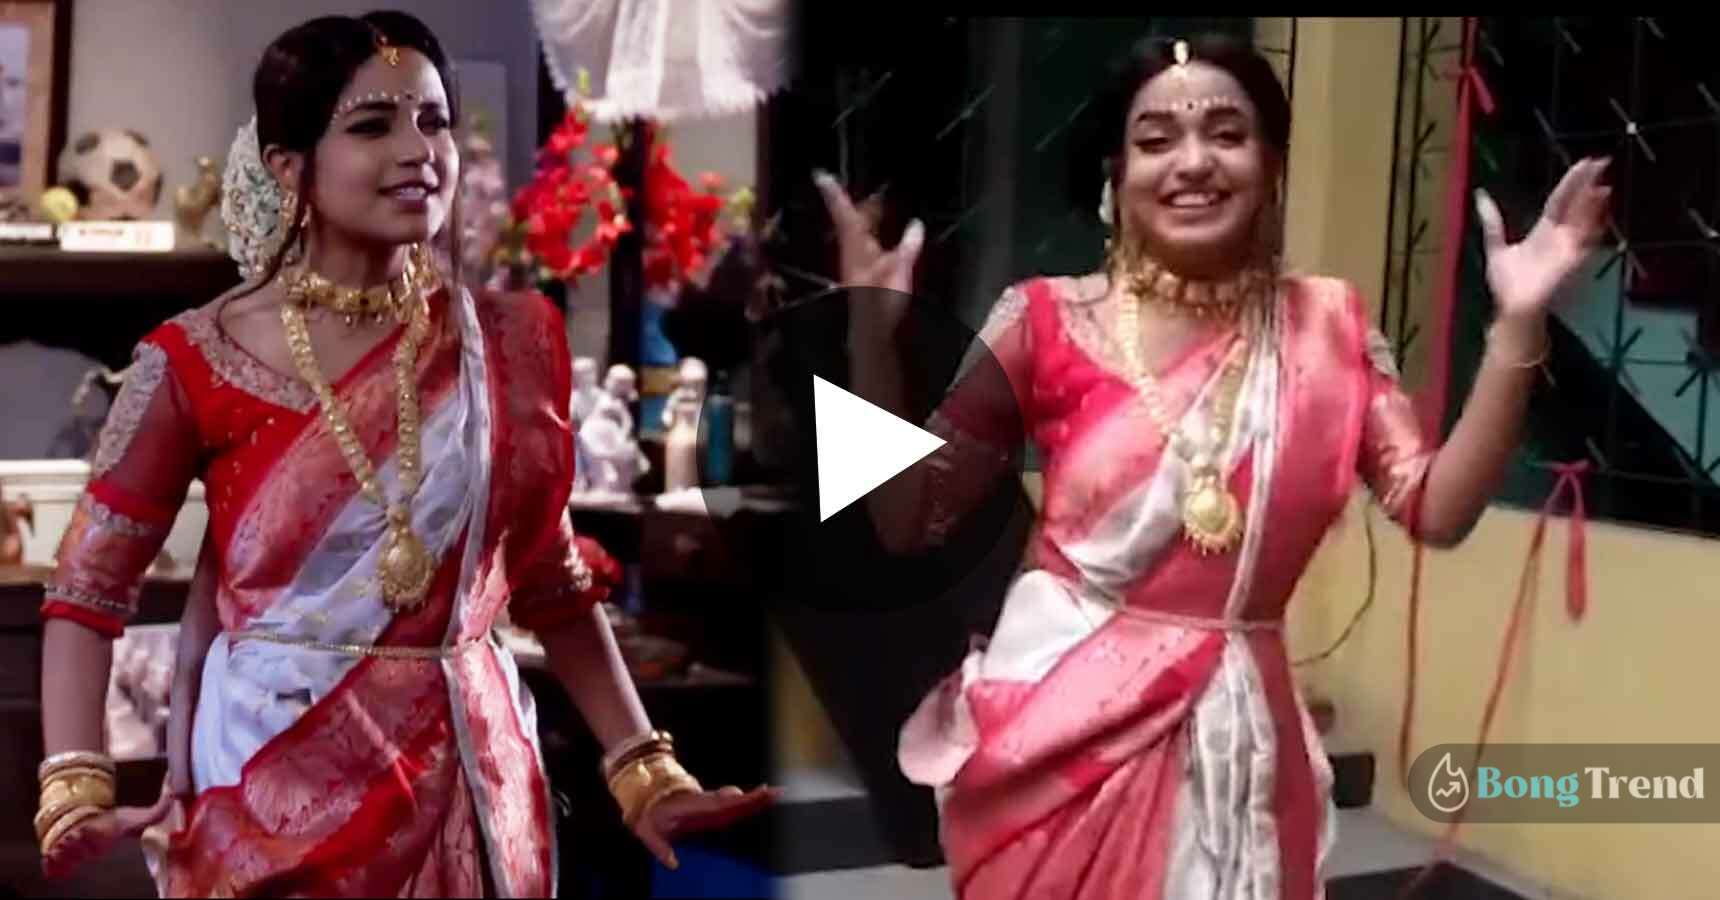 Urmi Satyaki Amader Ei Path Jodi Na Sesh Hoi উর্মি সাত্যকি আমাদের এই পথ যদি না শেষ হয় Urmi Dance Video